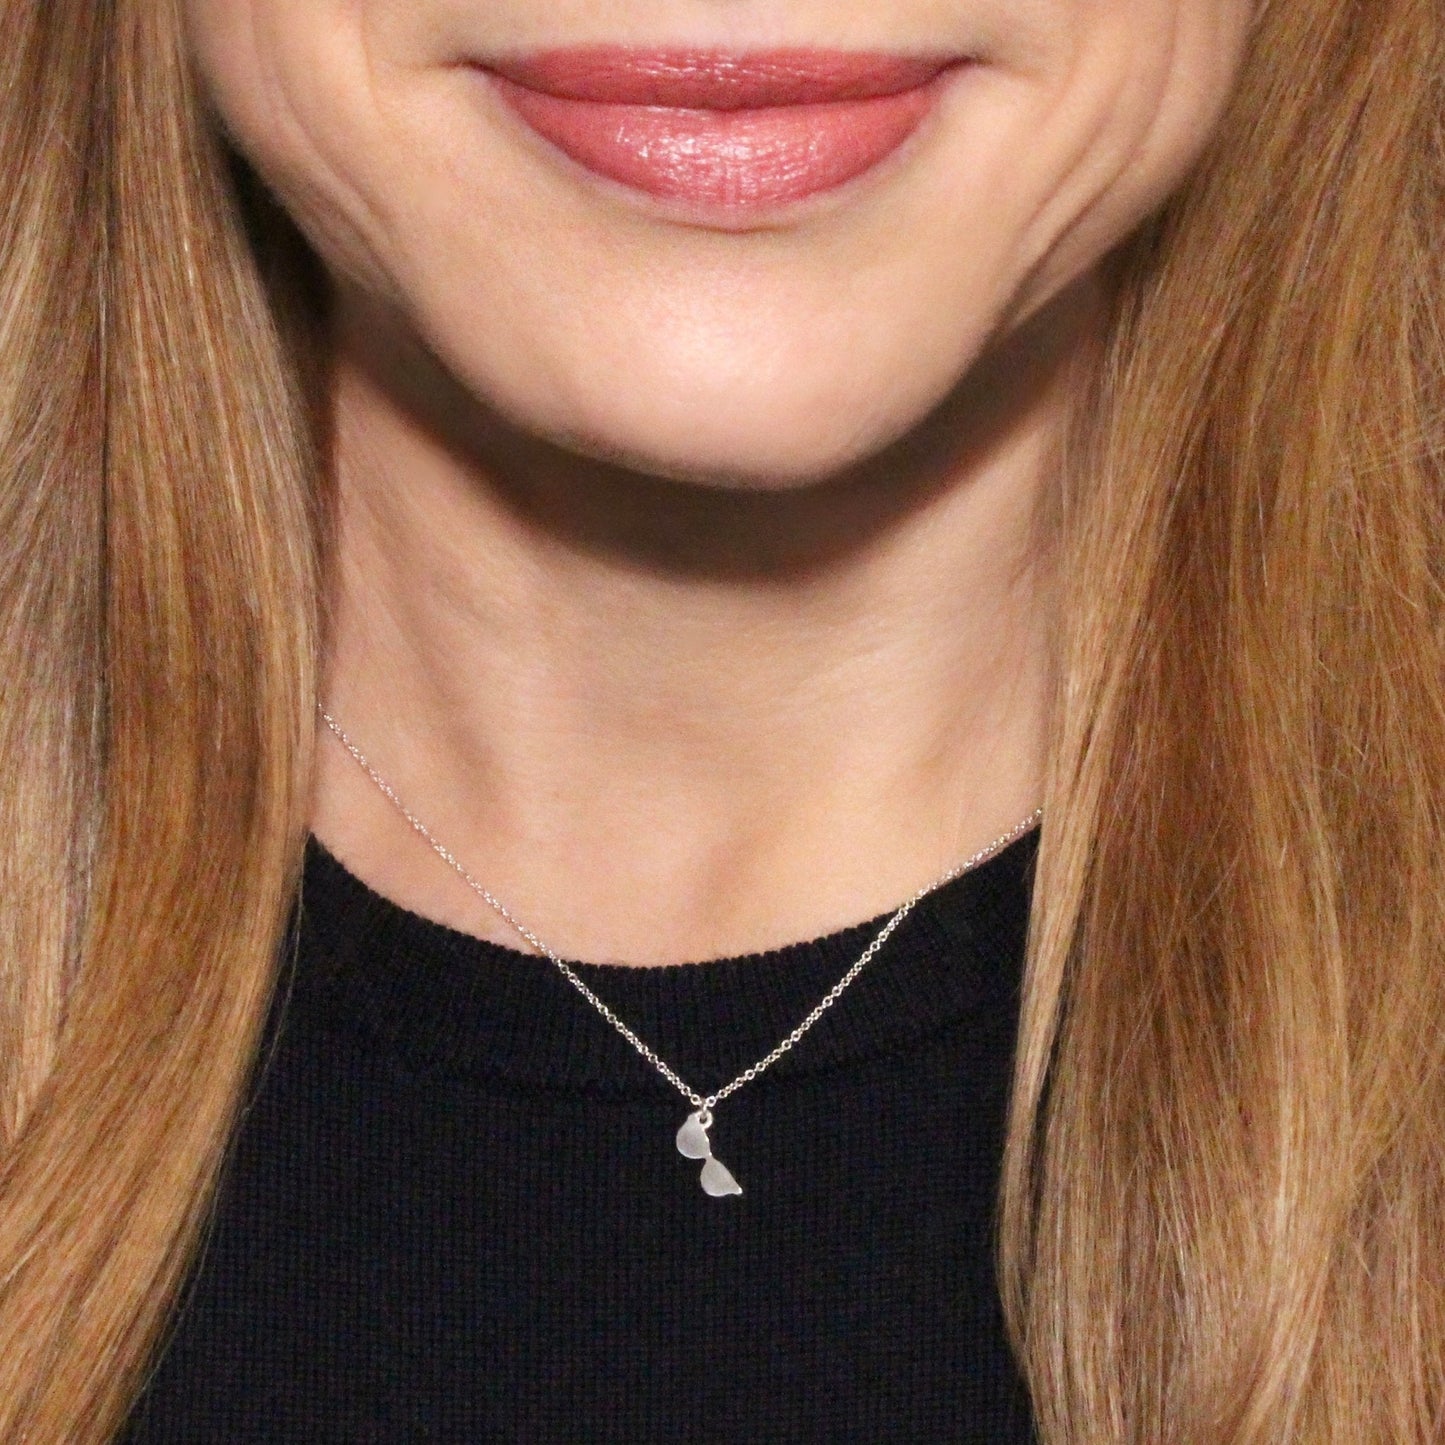 Icon Sunglasses Necklace in Sterling Silver - Mazi New York-jewelry